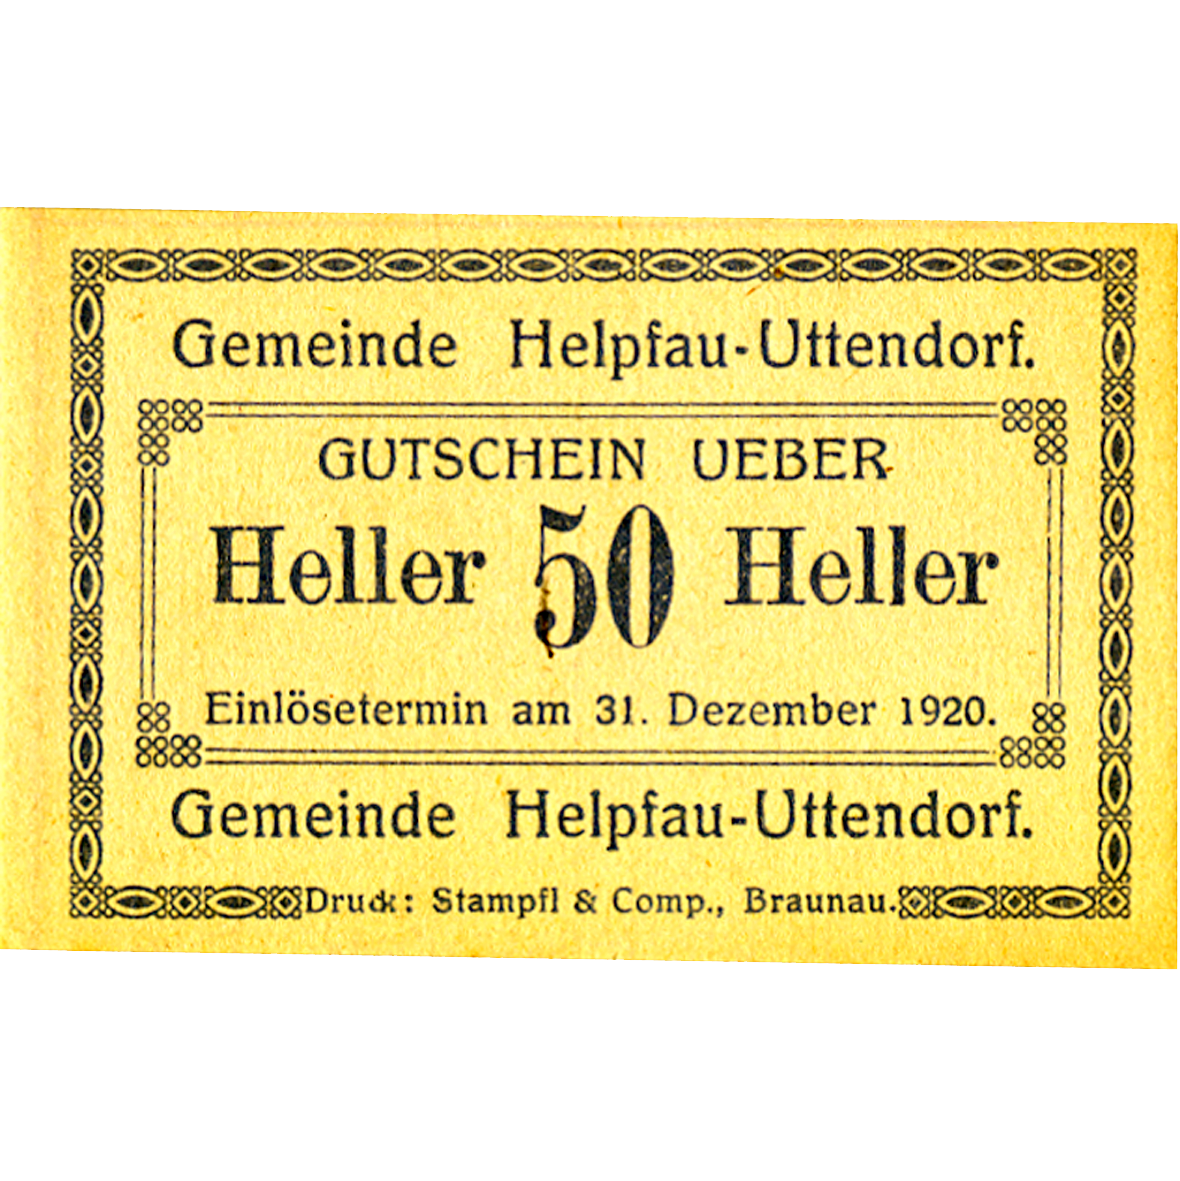 Republic of Austria, Community of Helpfau-Uttendorf, 50 Heller 1920 (obverse)